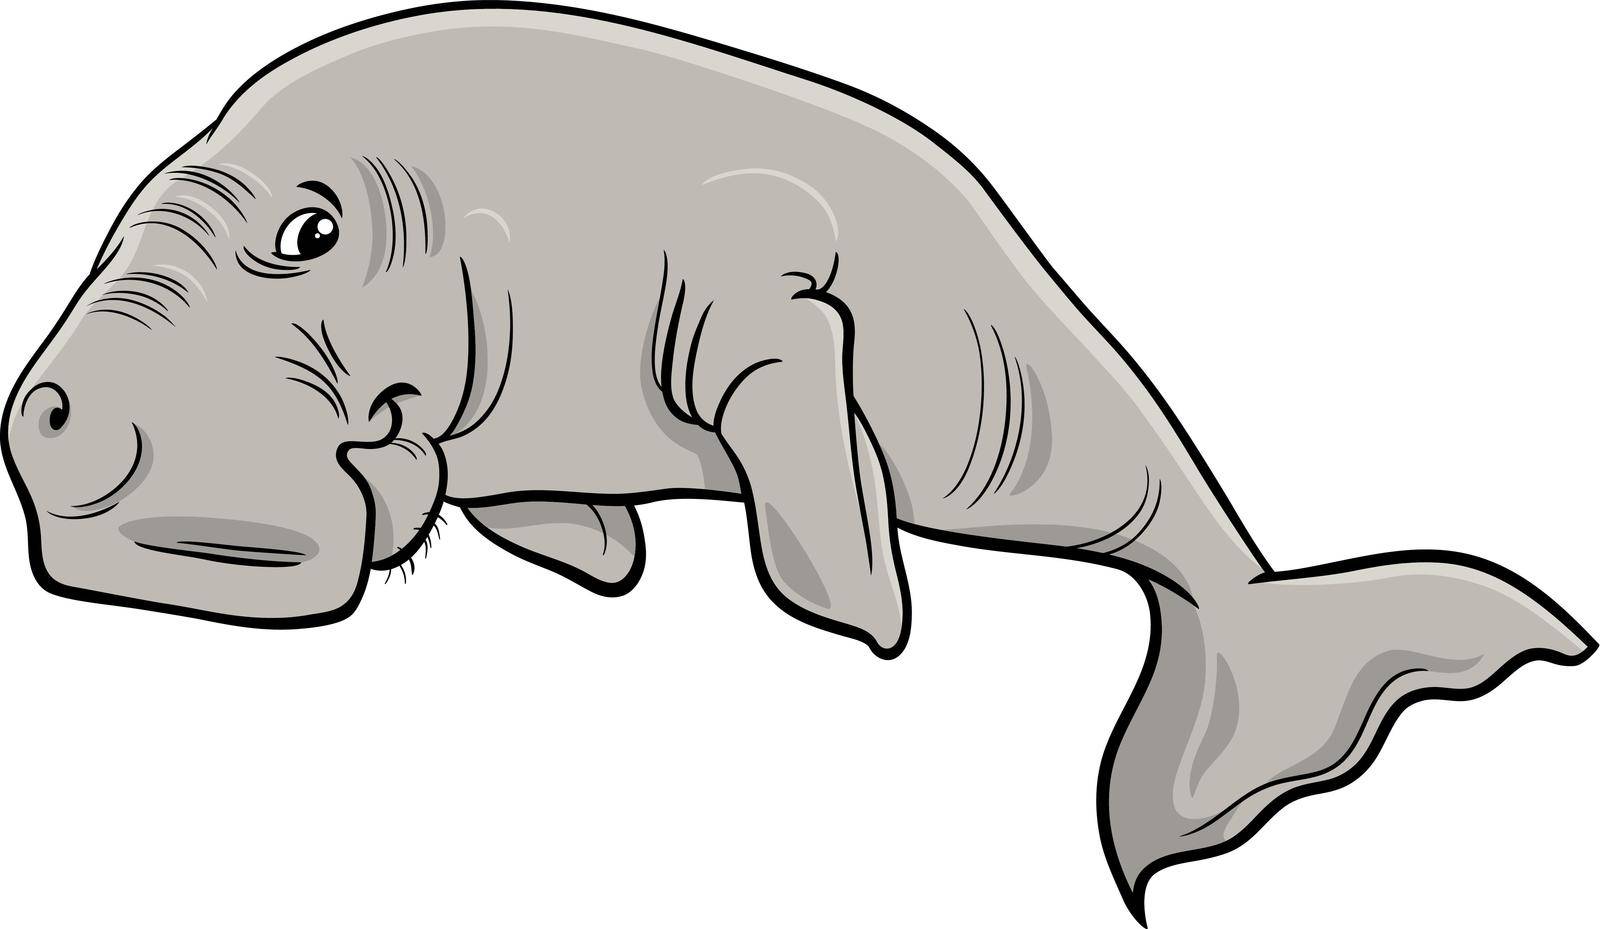 Cartoon illustration of dugong marine mammal animal character